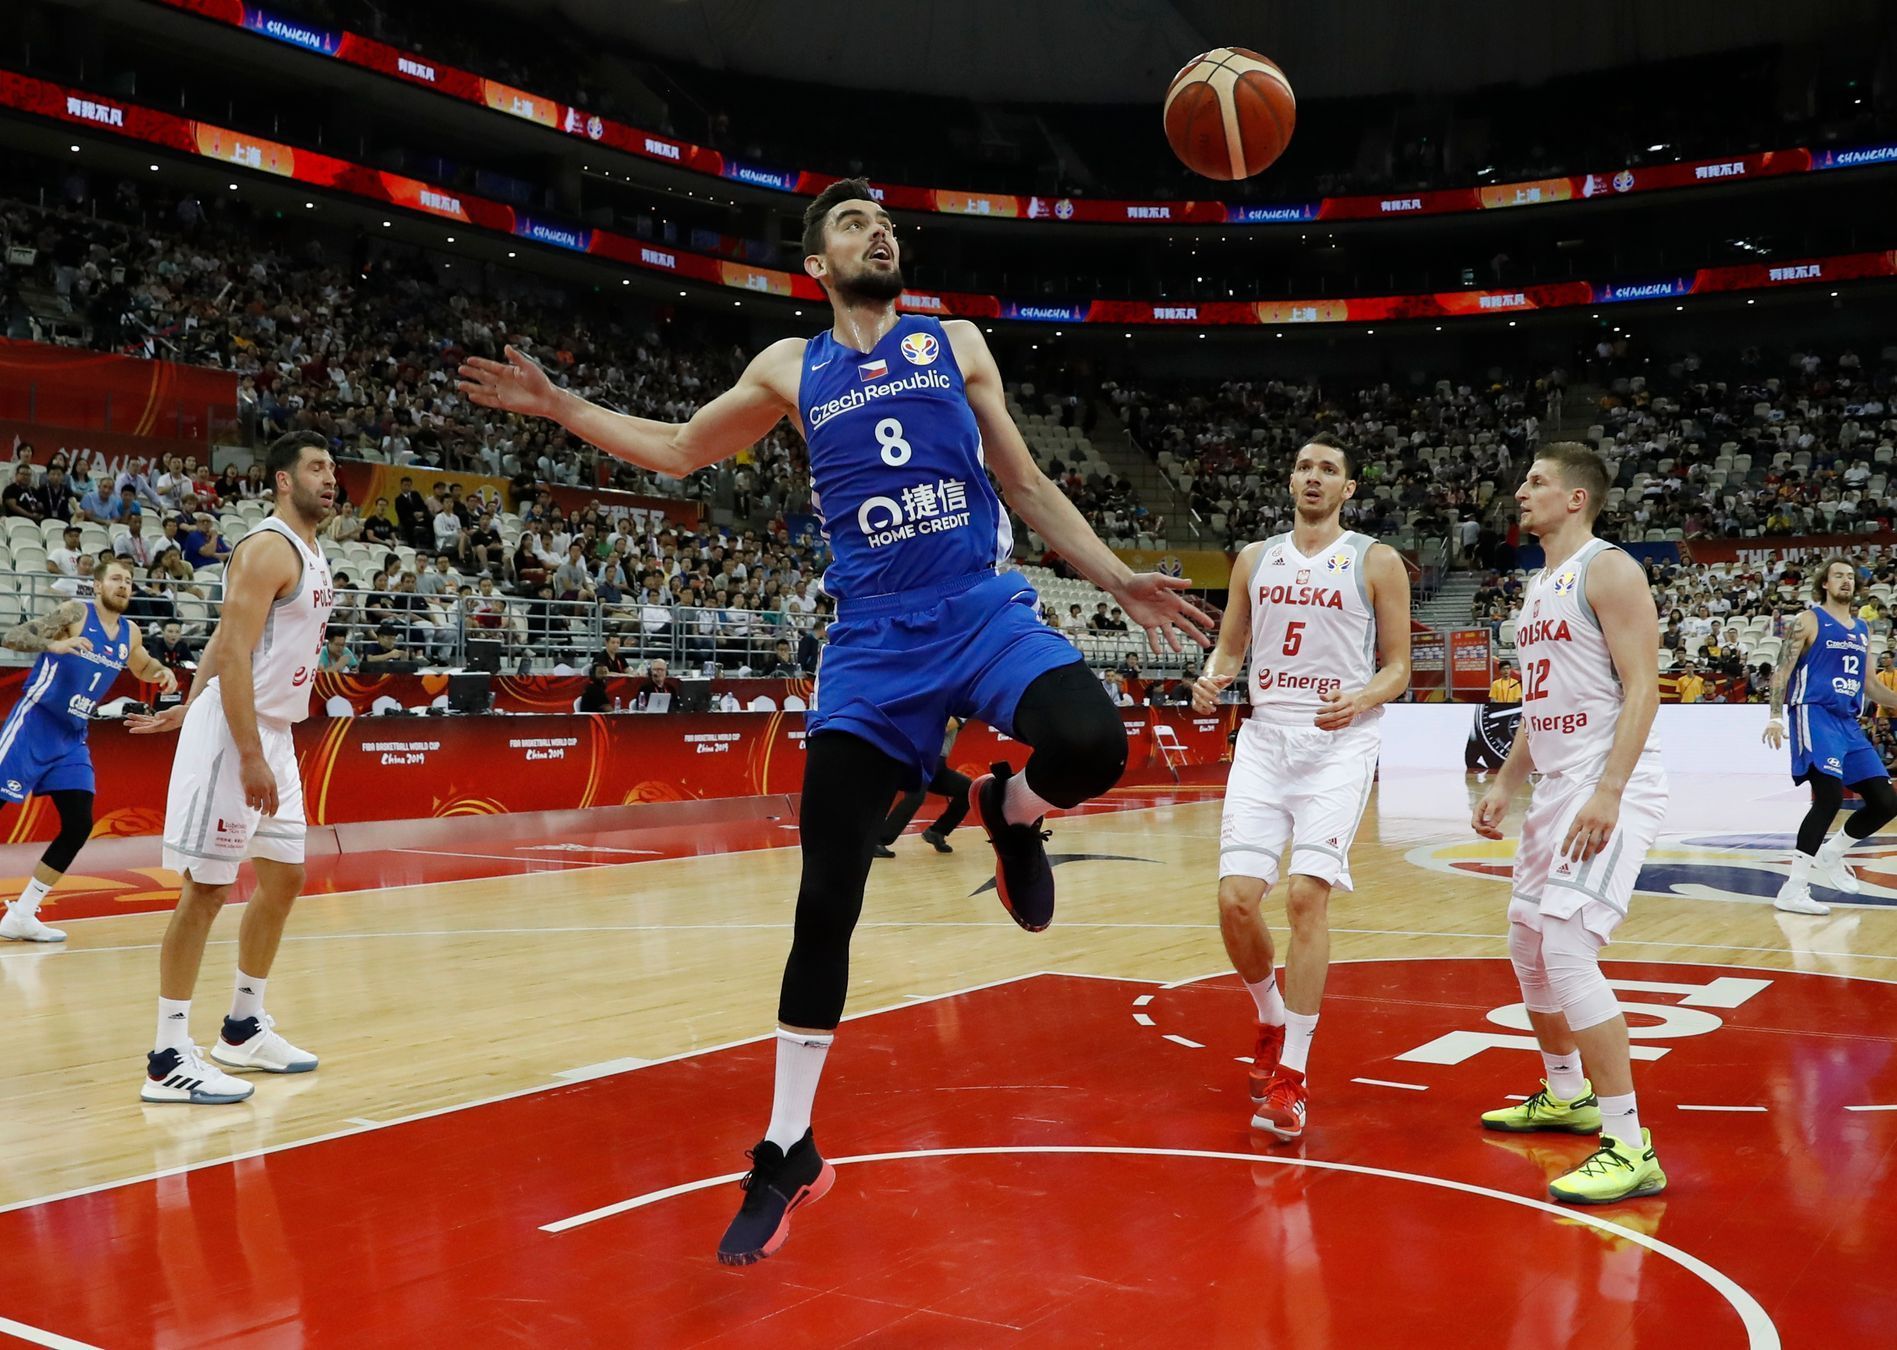 basketbal, MS 2019, Česko - Polsko, Tomáš Satoranský